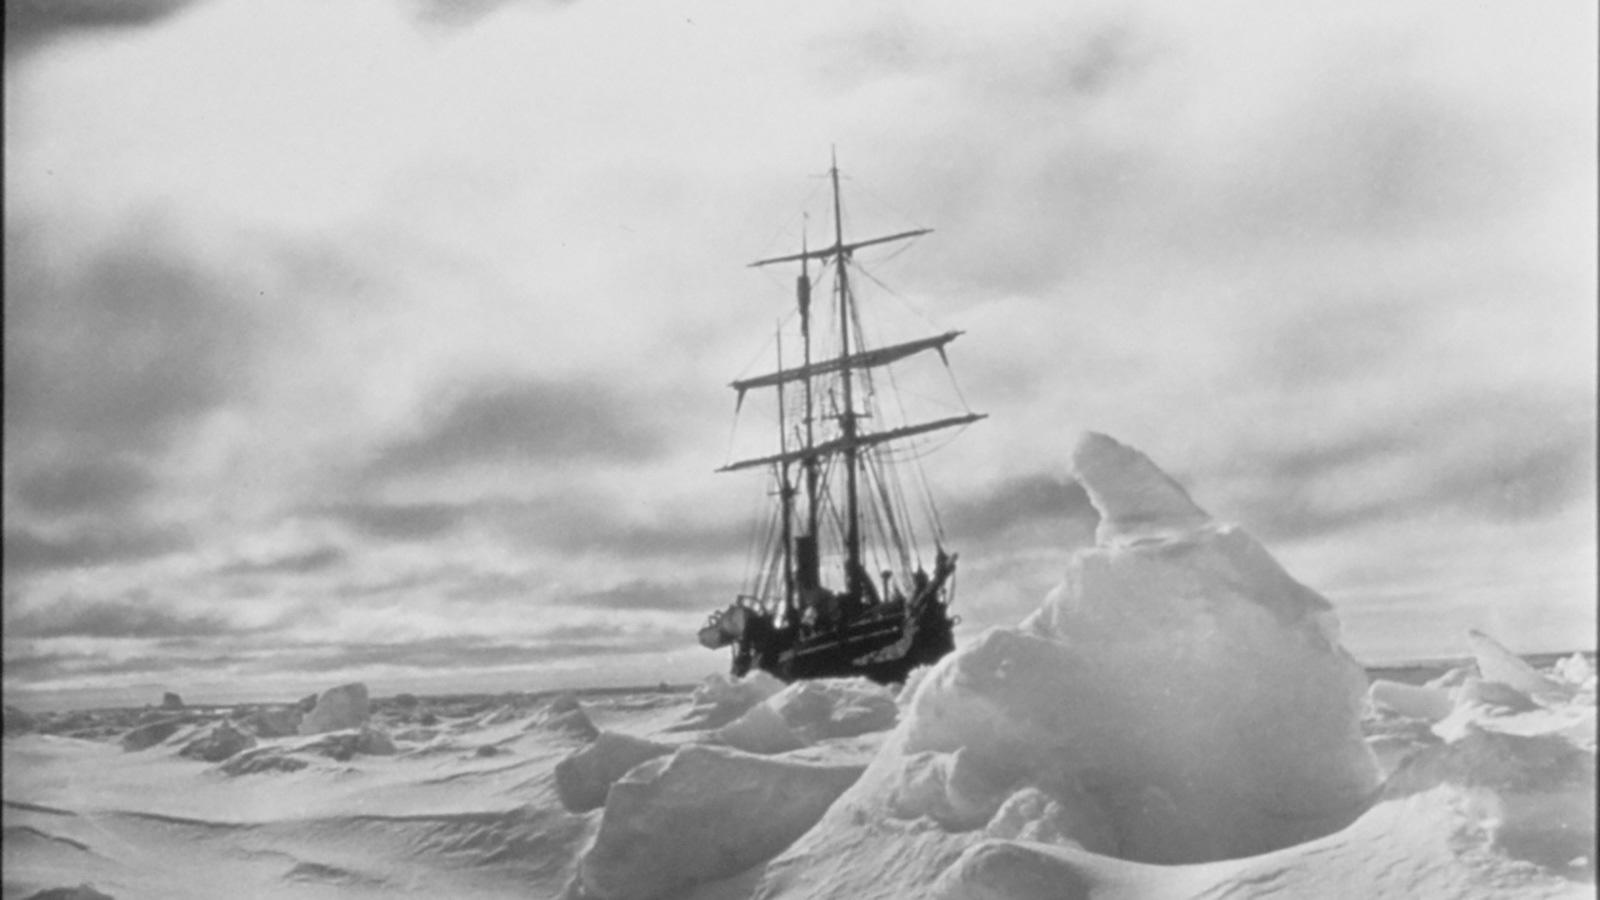 https://blog.idonethis.com/wp-content/uploads/2015/07/Hazardous_journey_in_Shackleton_job_ad.jpg